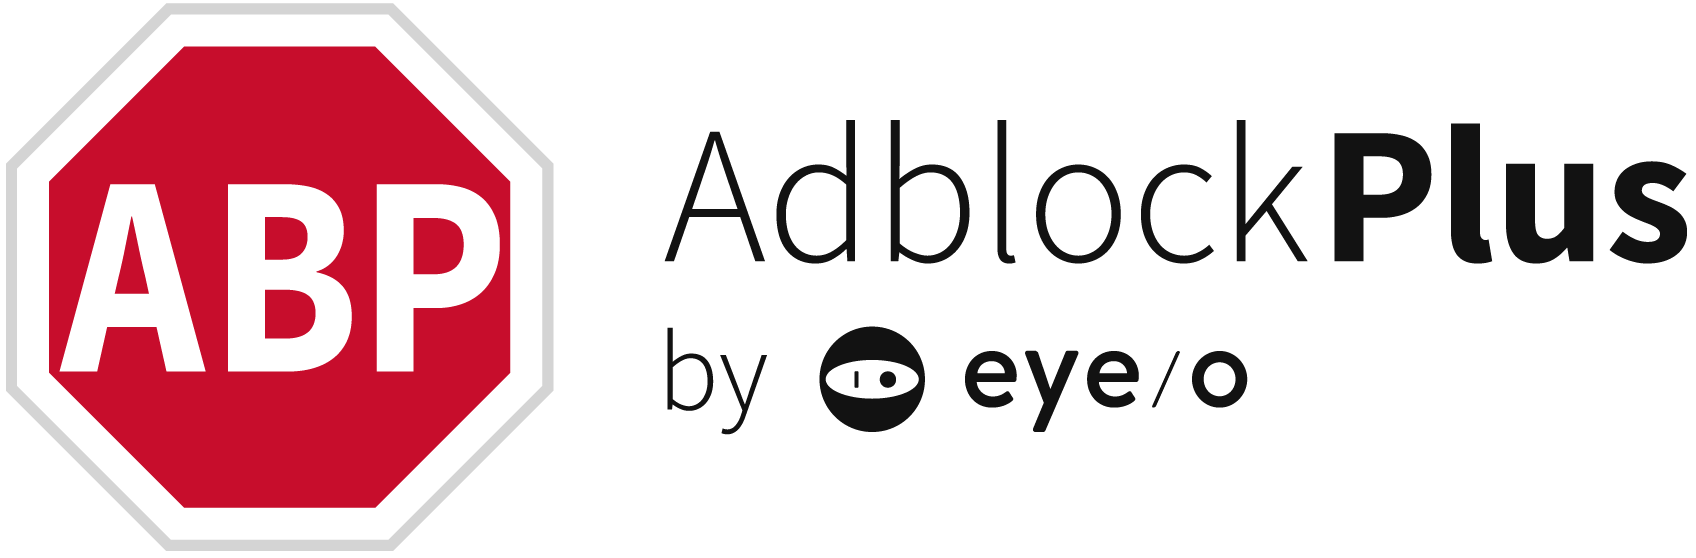 Adblock Logo - Open Source Initiative Announces New Partnership With Adblock Plus ...